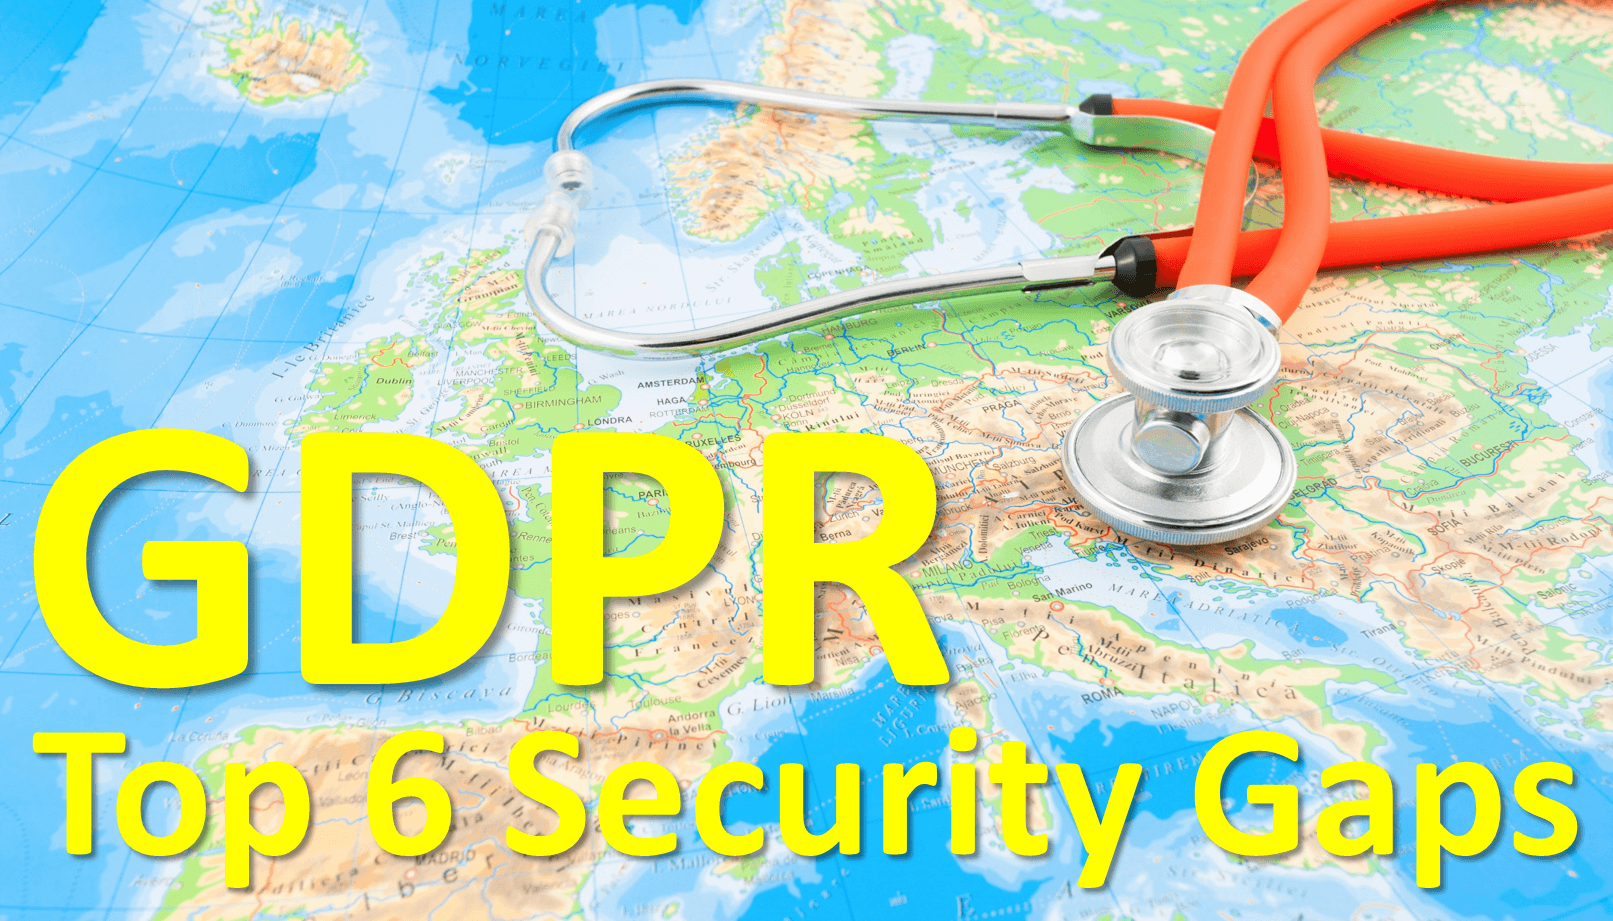 GDPR top 6 security gaps in healthcare security